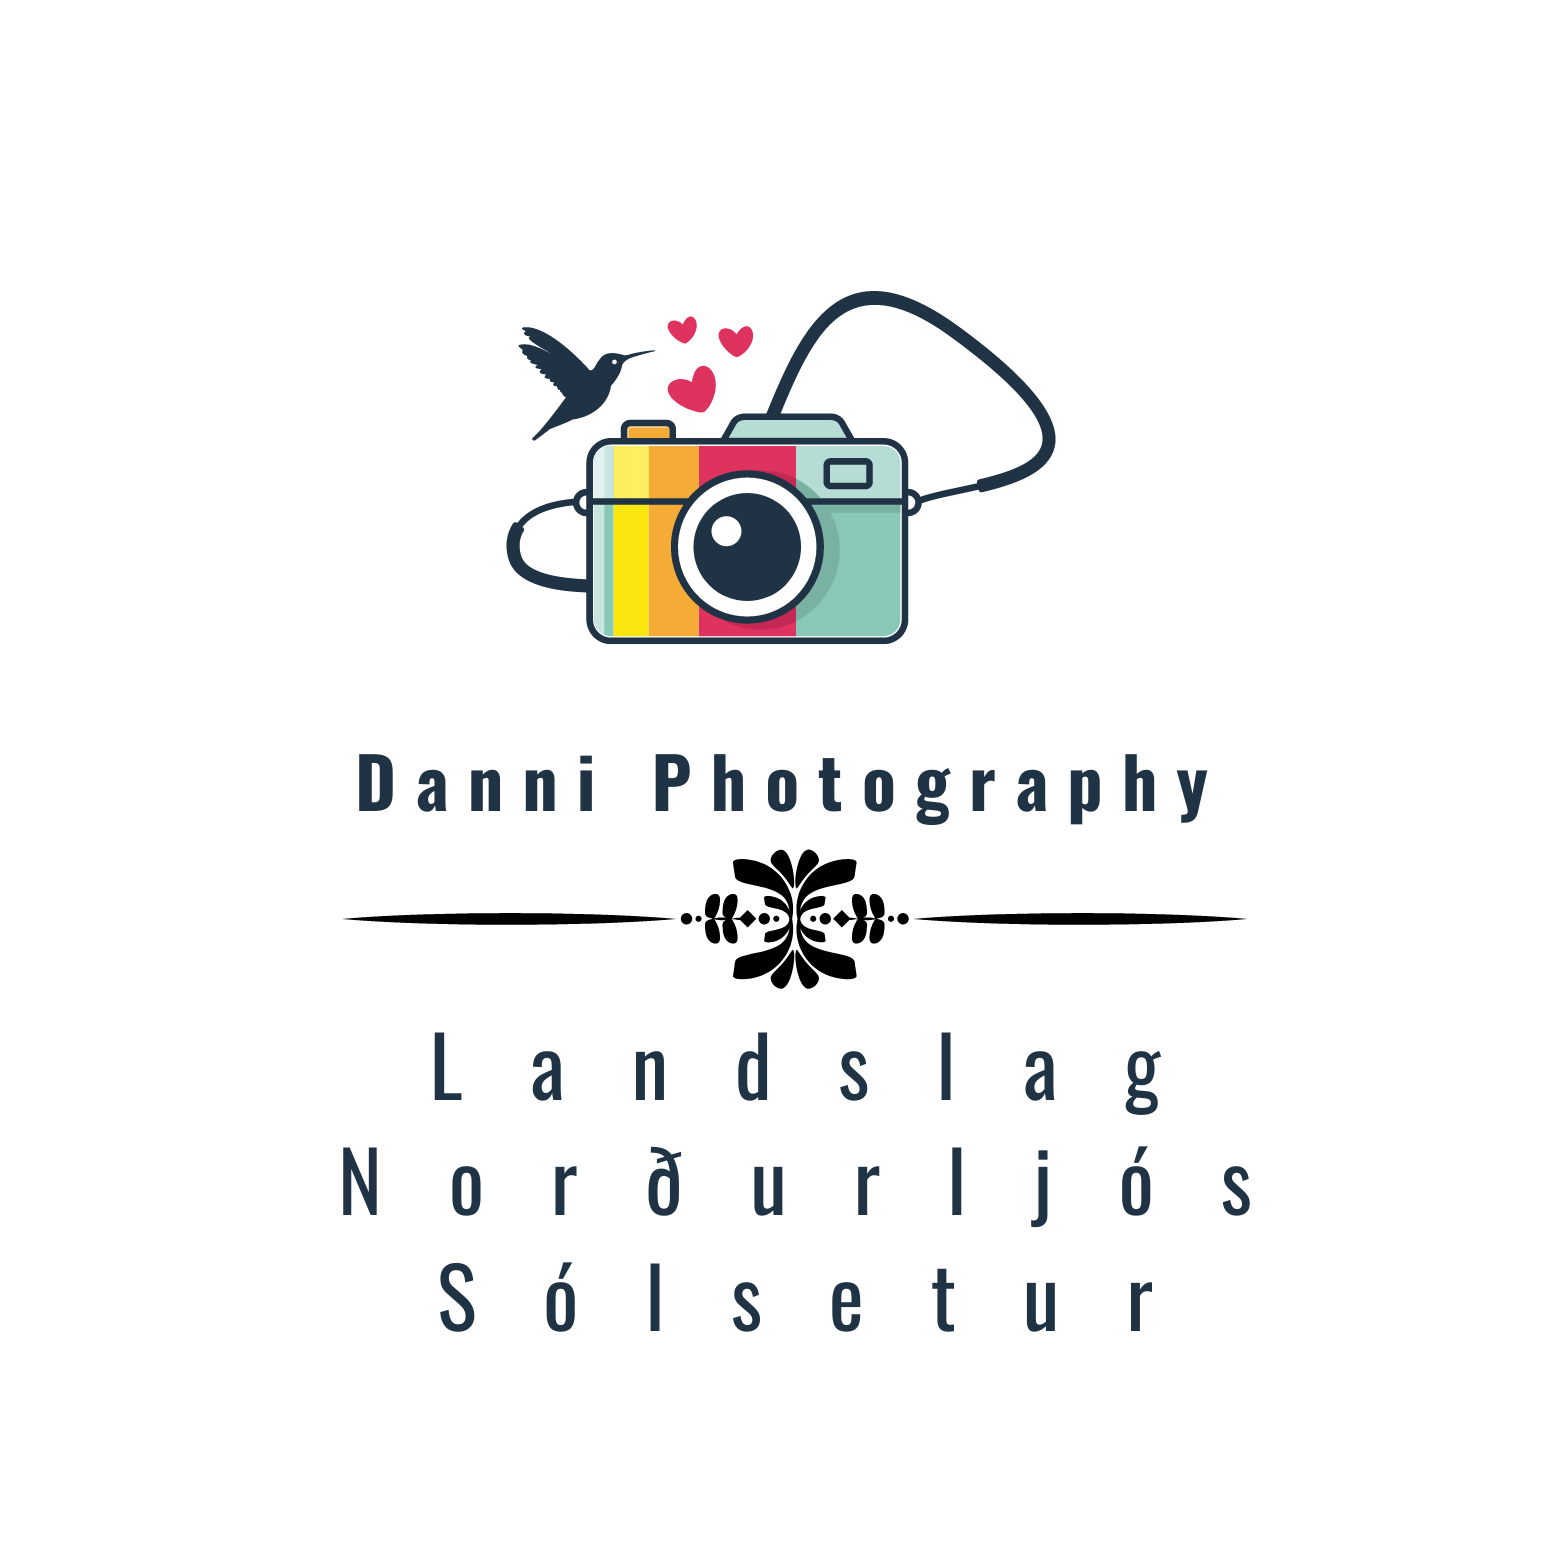 Danni Photography